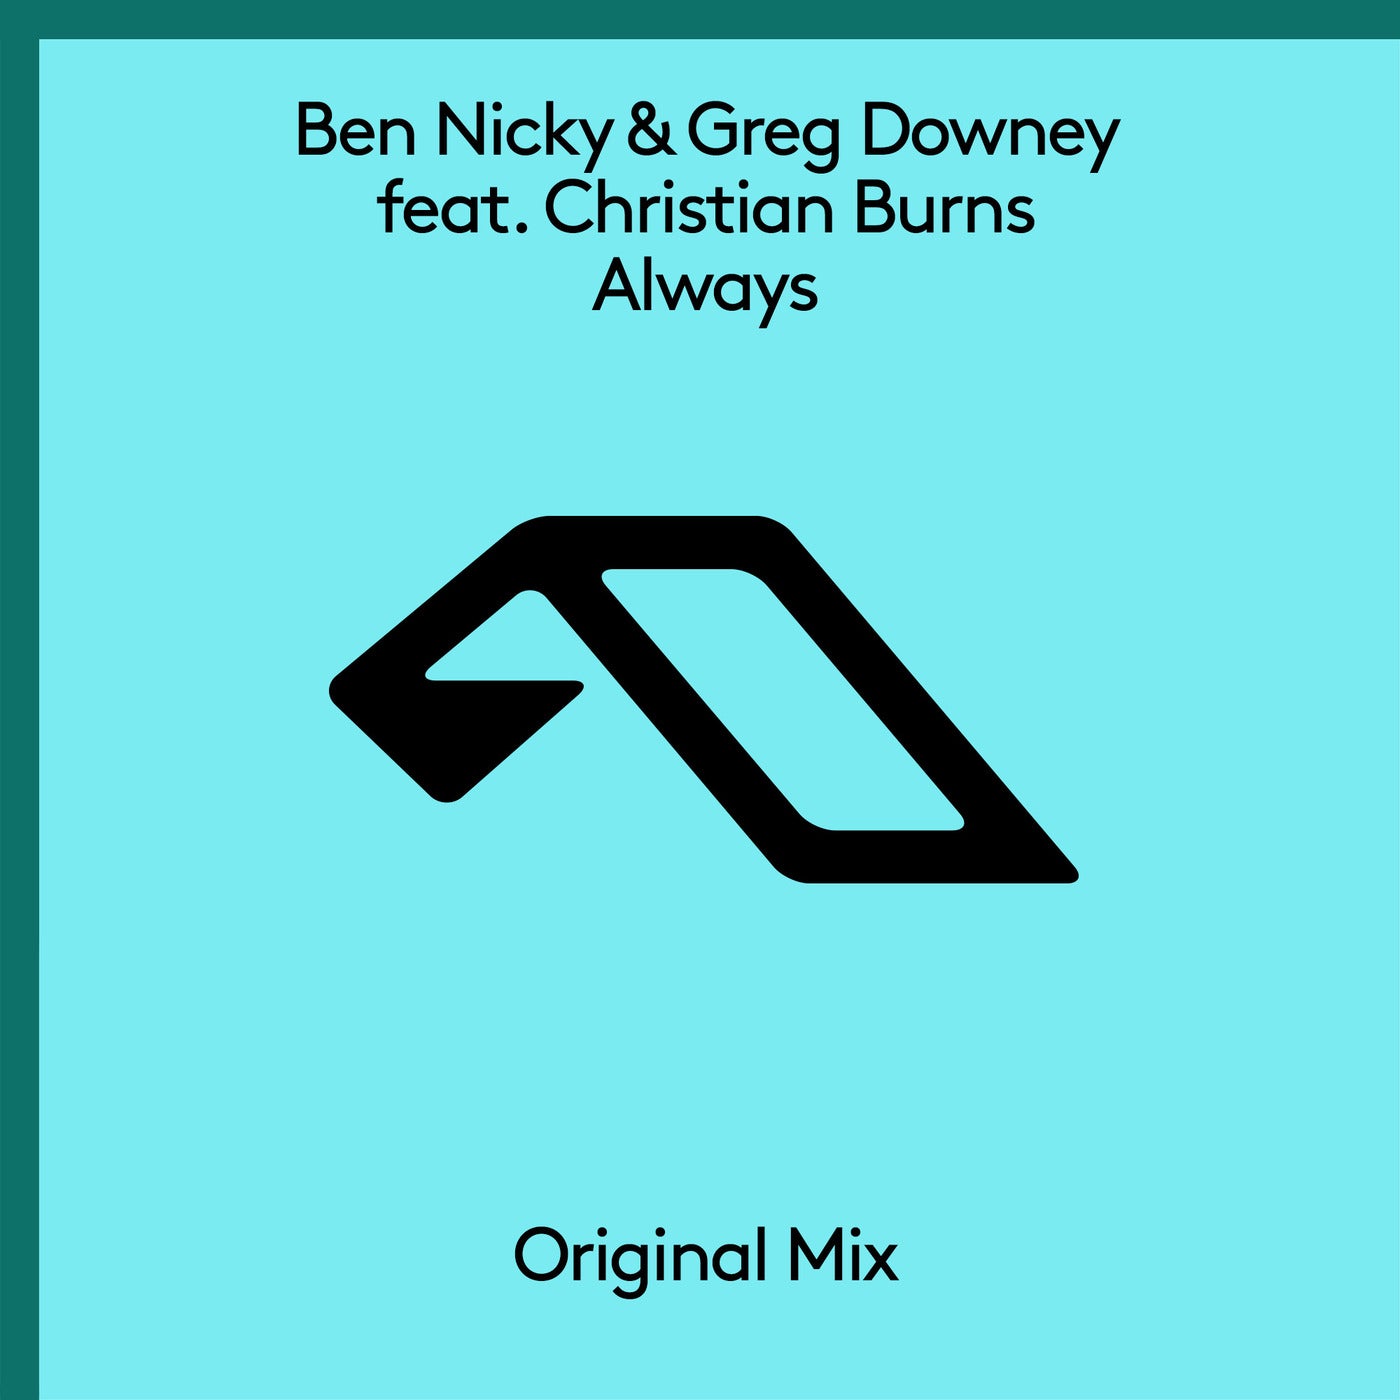 Ben Nicky & Greg Downey ft. featuring Christian Burns Always cover artwork